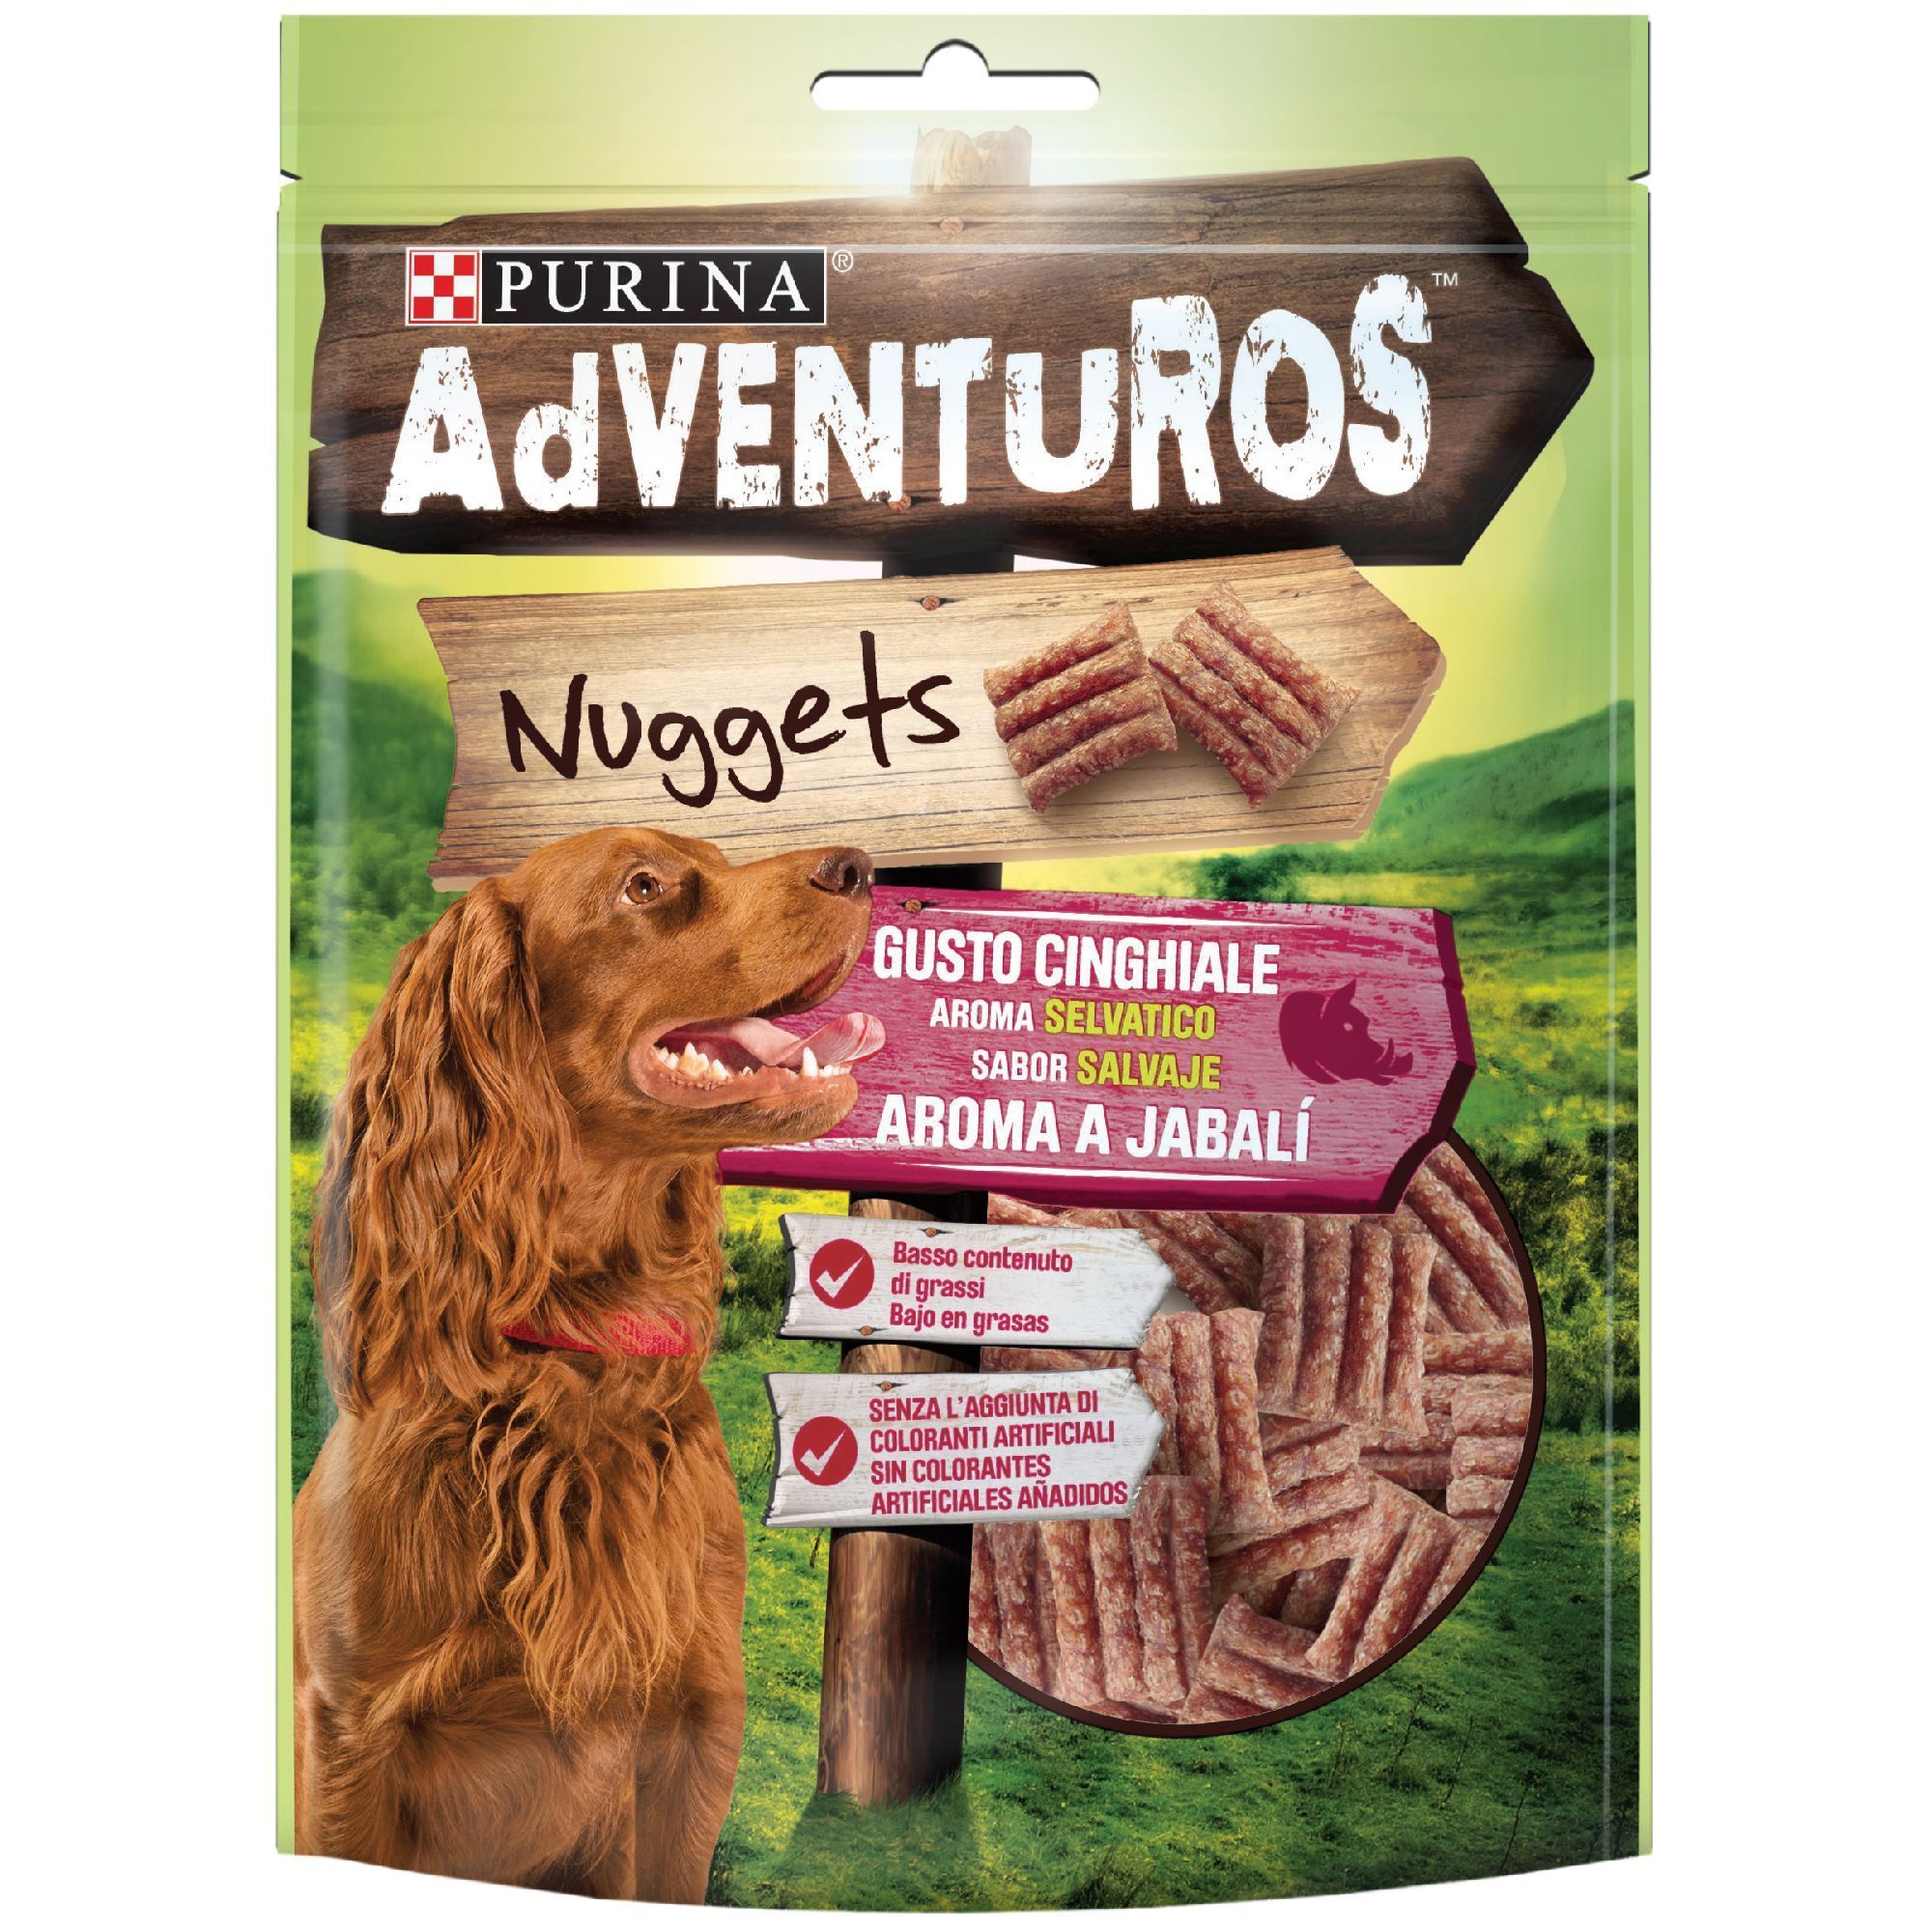 ADVENTUROS Snack Nuggets al gusto Cinghiale per Cane | PURINA Shop